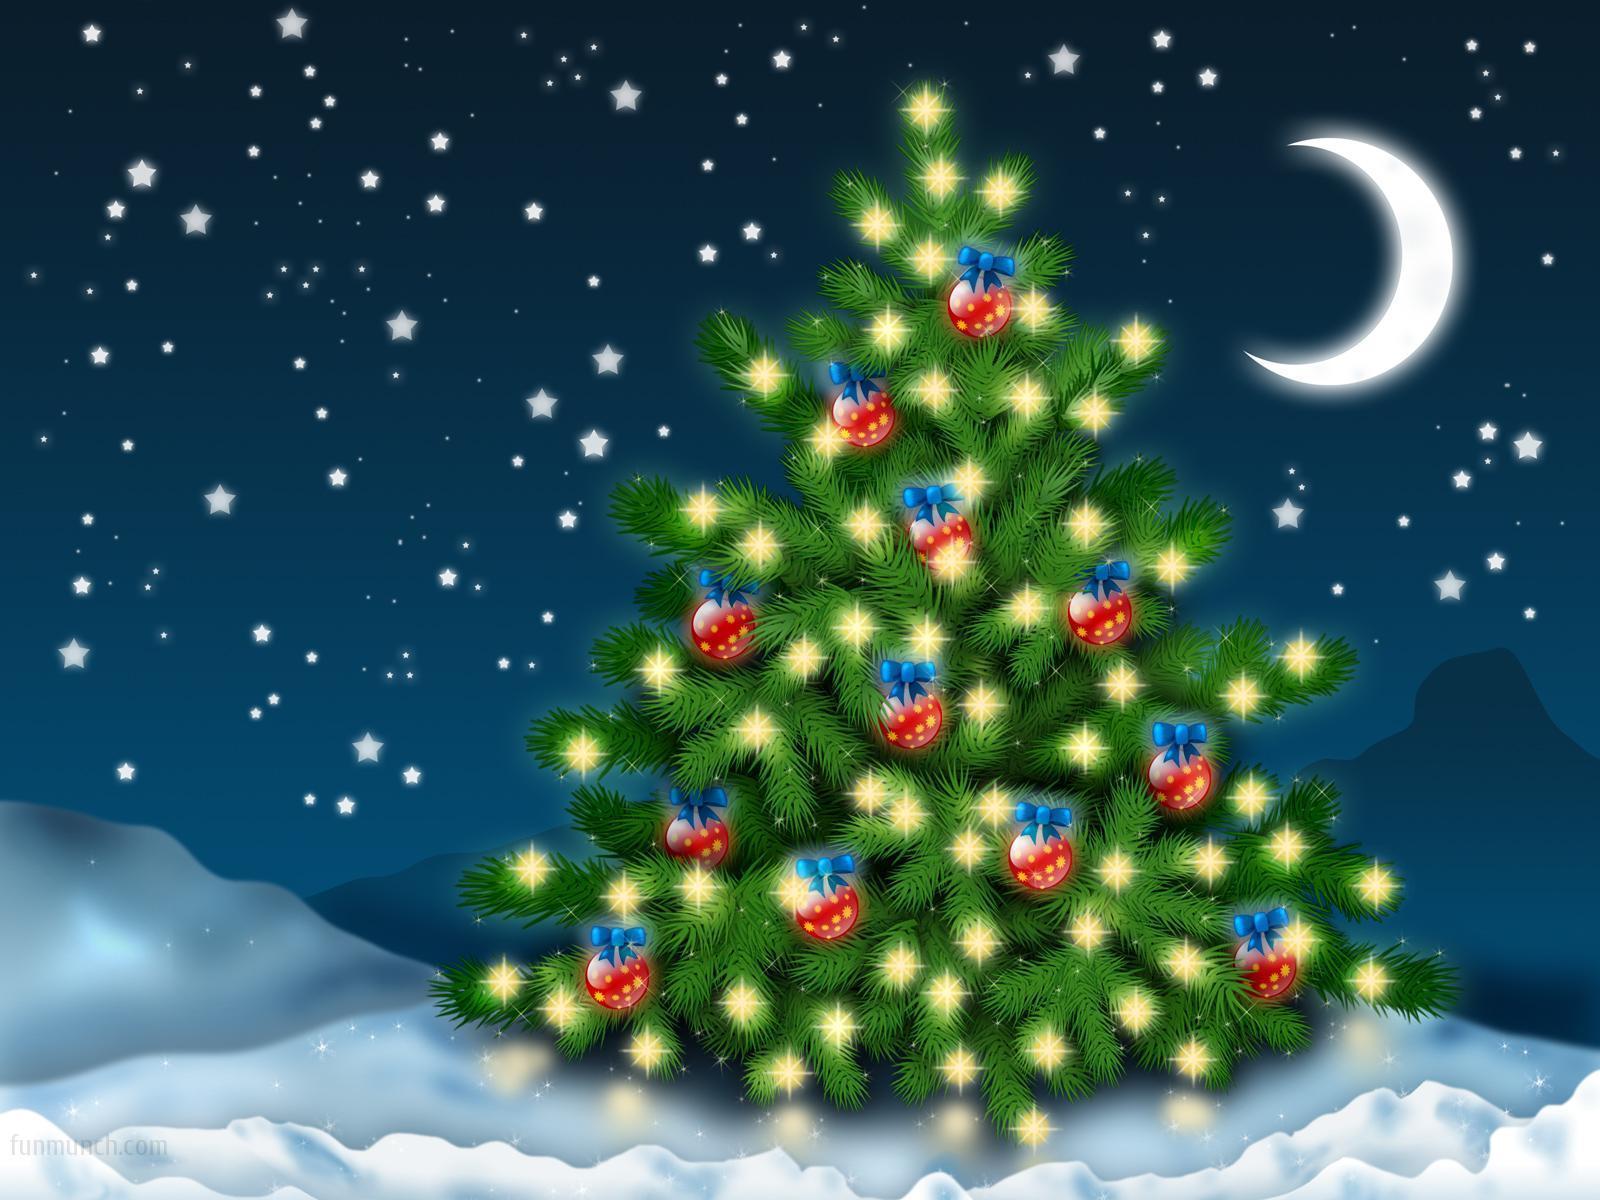 Bright Christmas Lights   Bright Colors Wallpaper  17363877    Fanpop